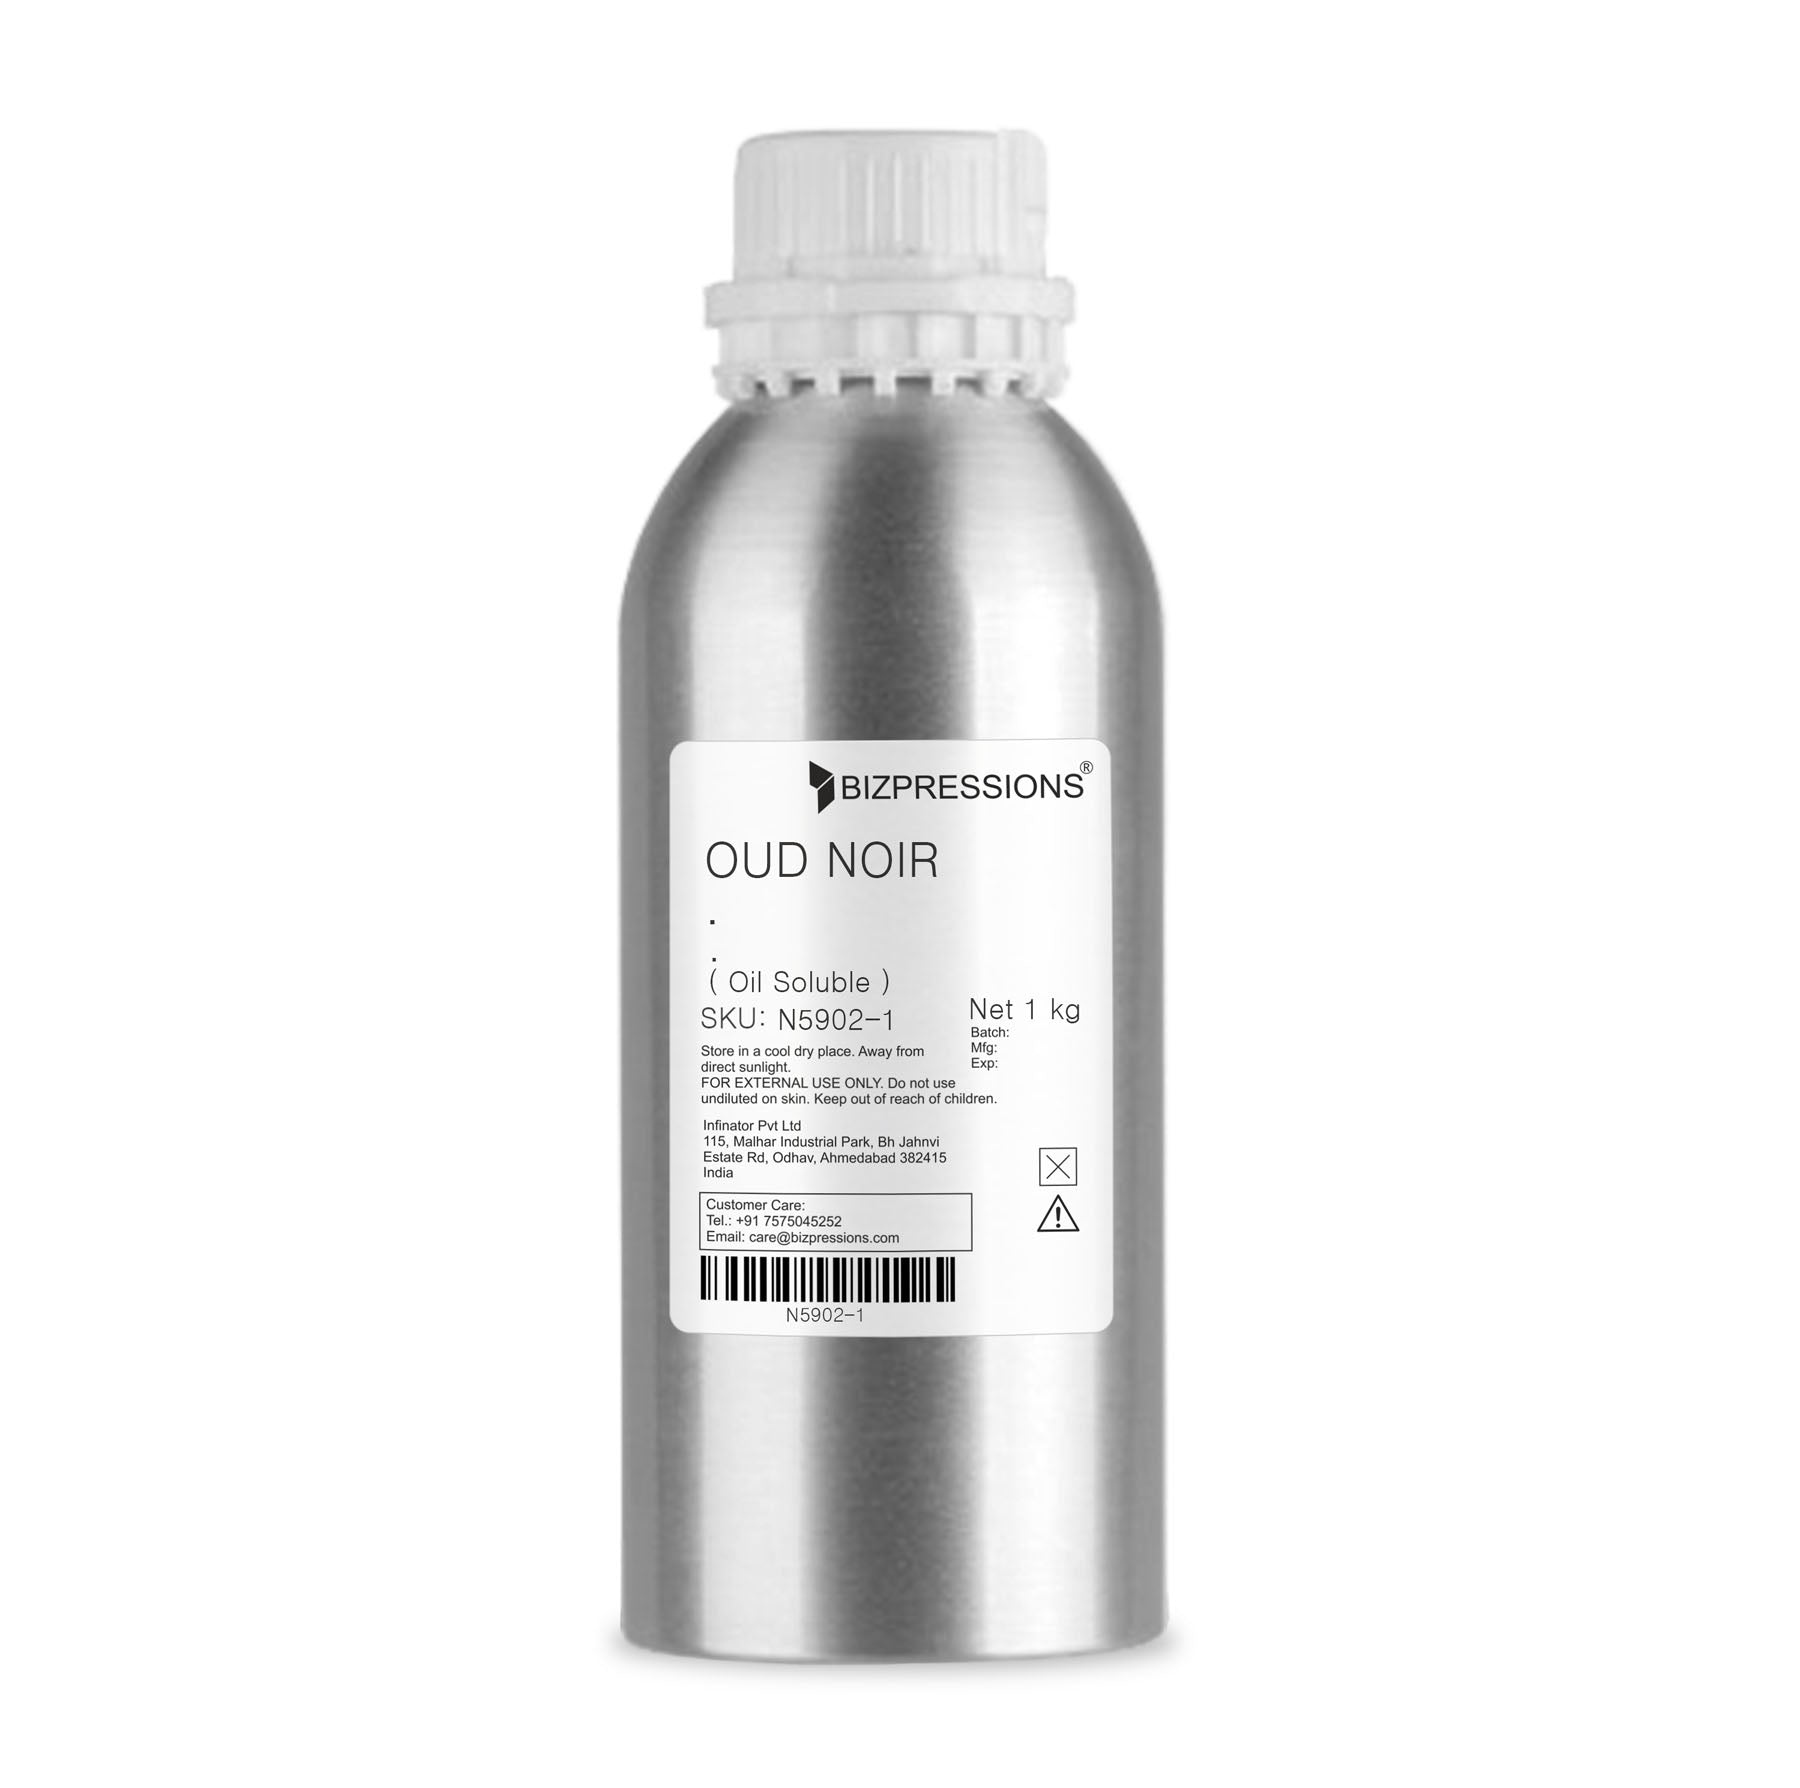 OUD NOIR - Fragrance ( Oil Soluble ) - 1 kg